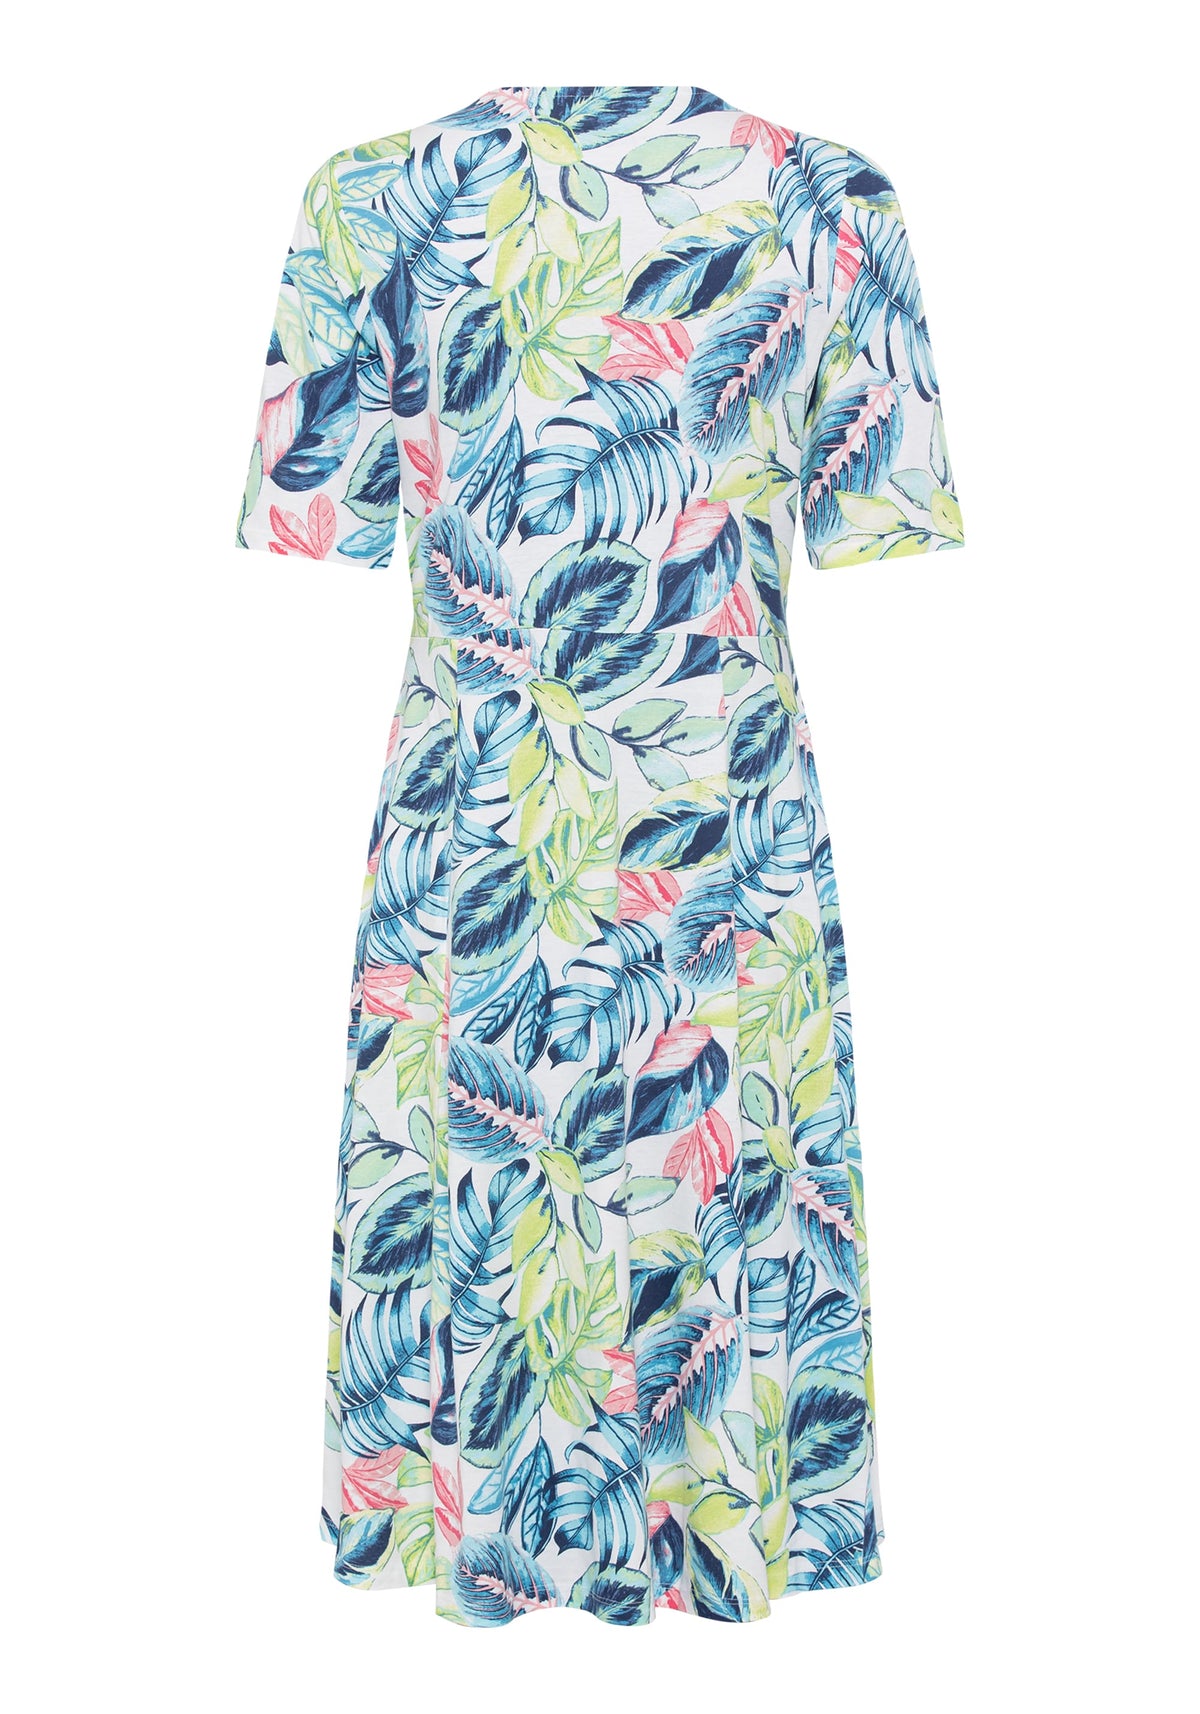 Short Sleeve Tropic Print A-Line Dress containing TENCEL™ Modal